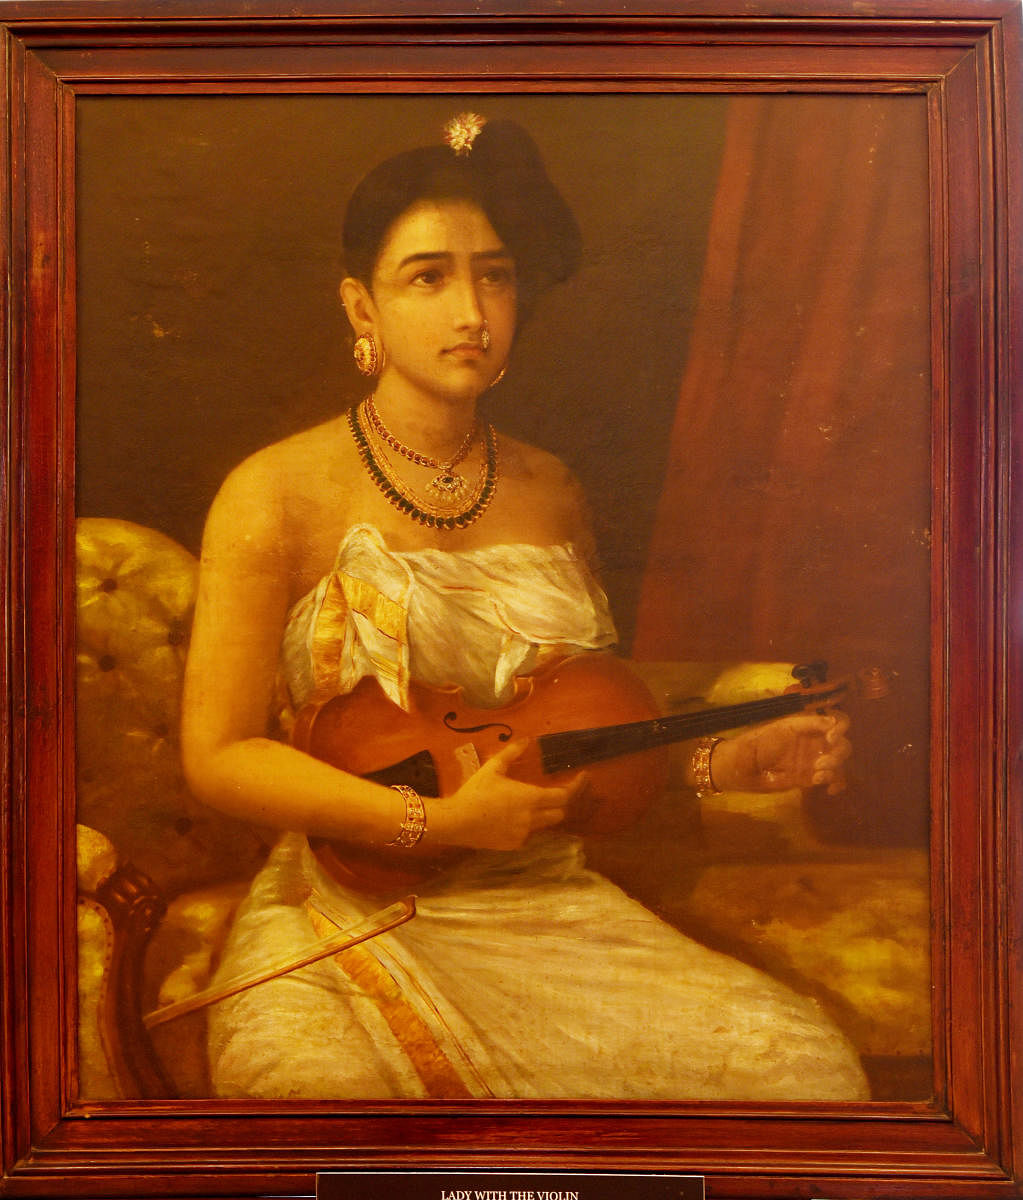 'Lady with the violin' by Raja Ravi Varma.